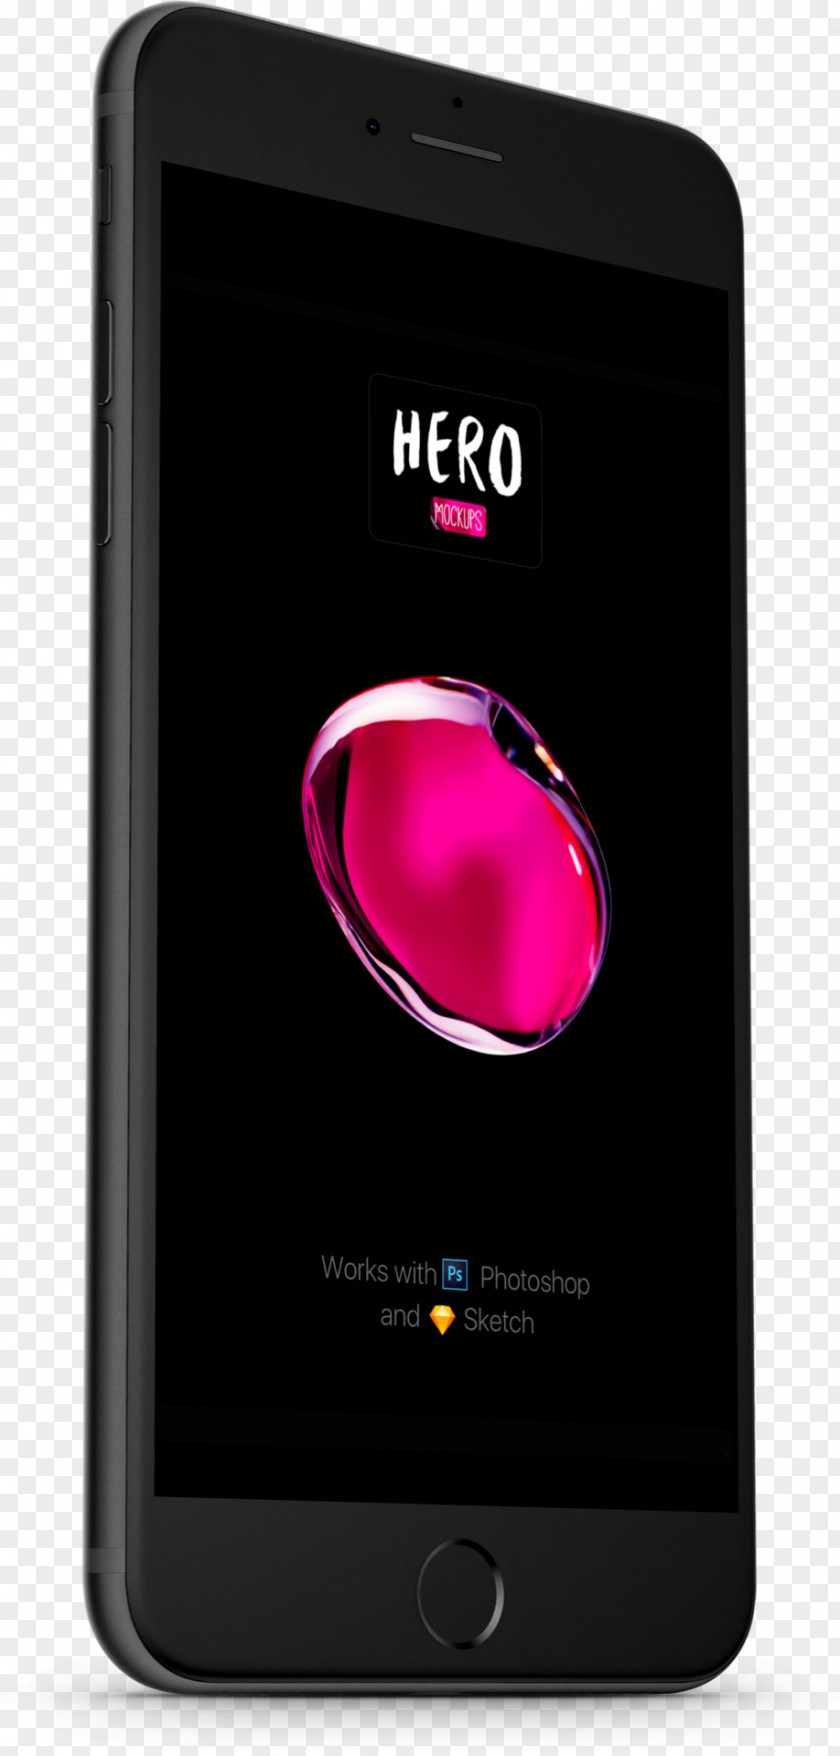 Iphone Mockup Sketch Feature Phone Smartphone Apple IPhone 7 Plus (32GB, Black) PNG